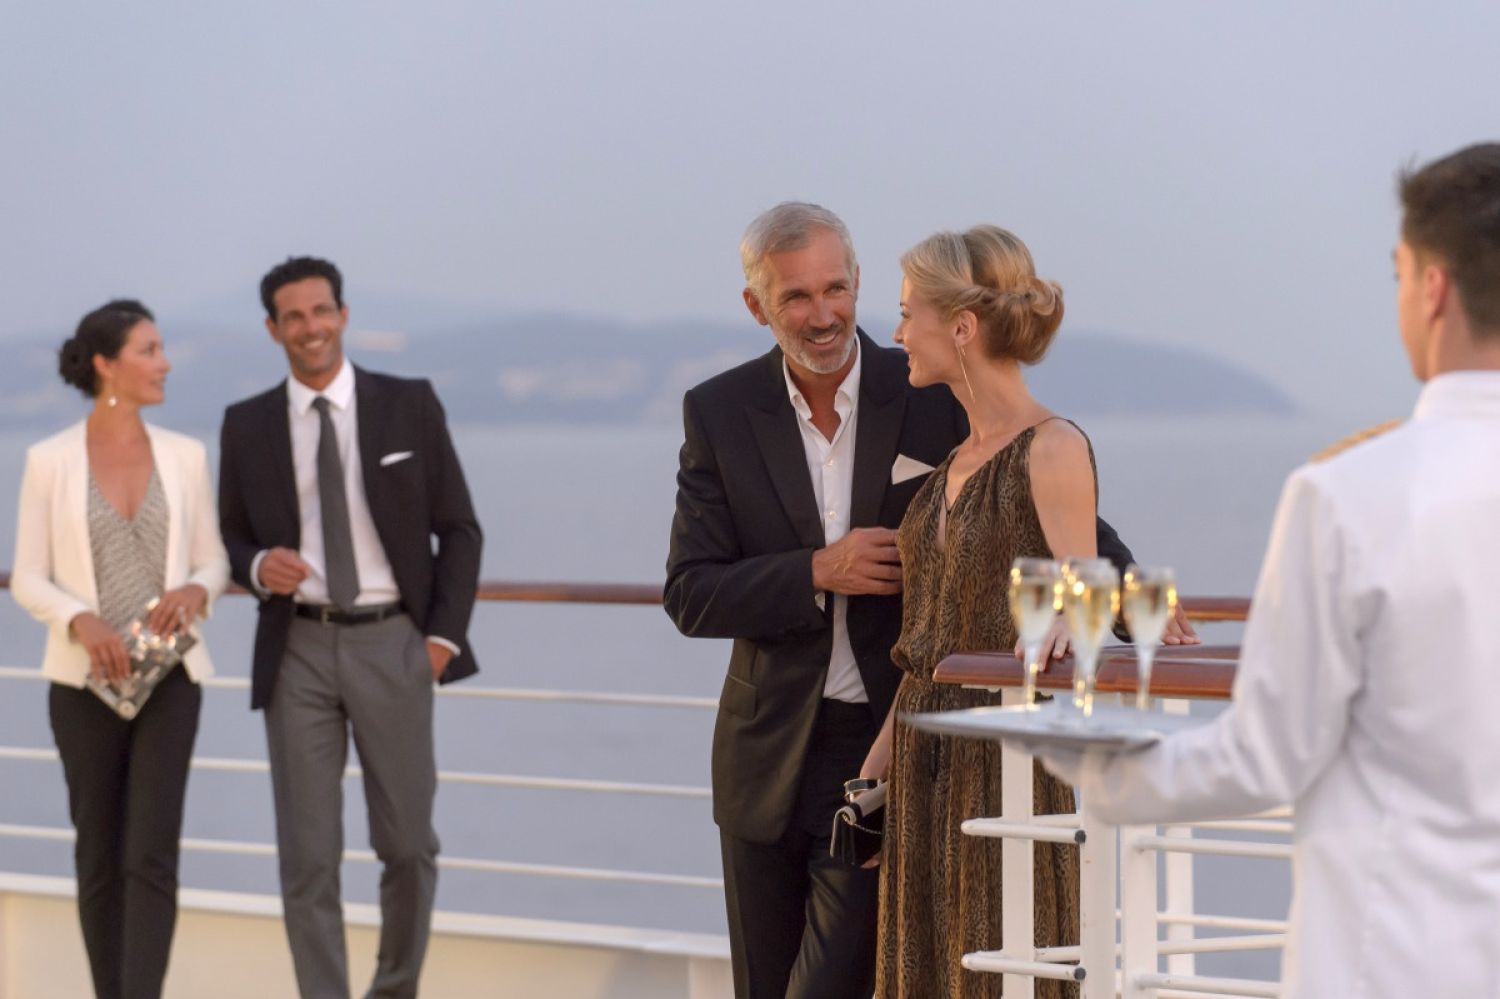 Ponant Luxury Cruise Ship champagne on deck N242